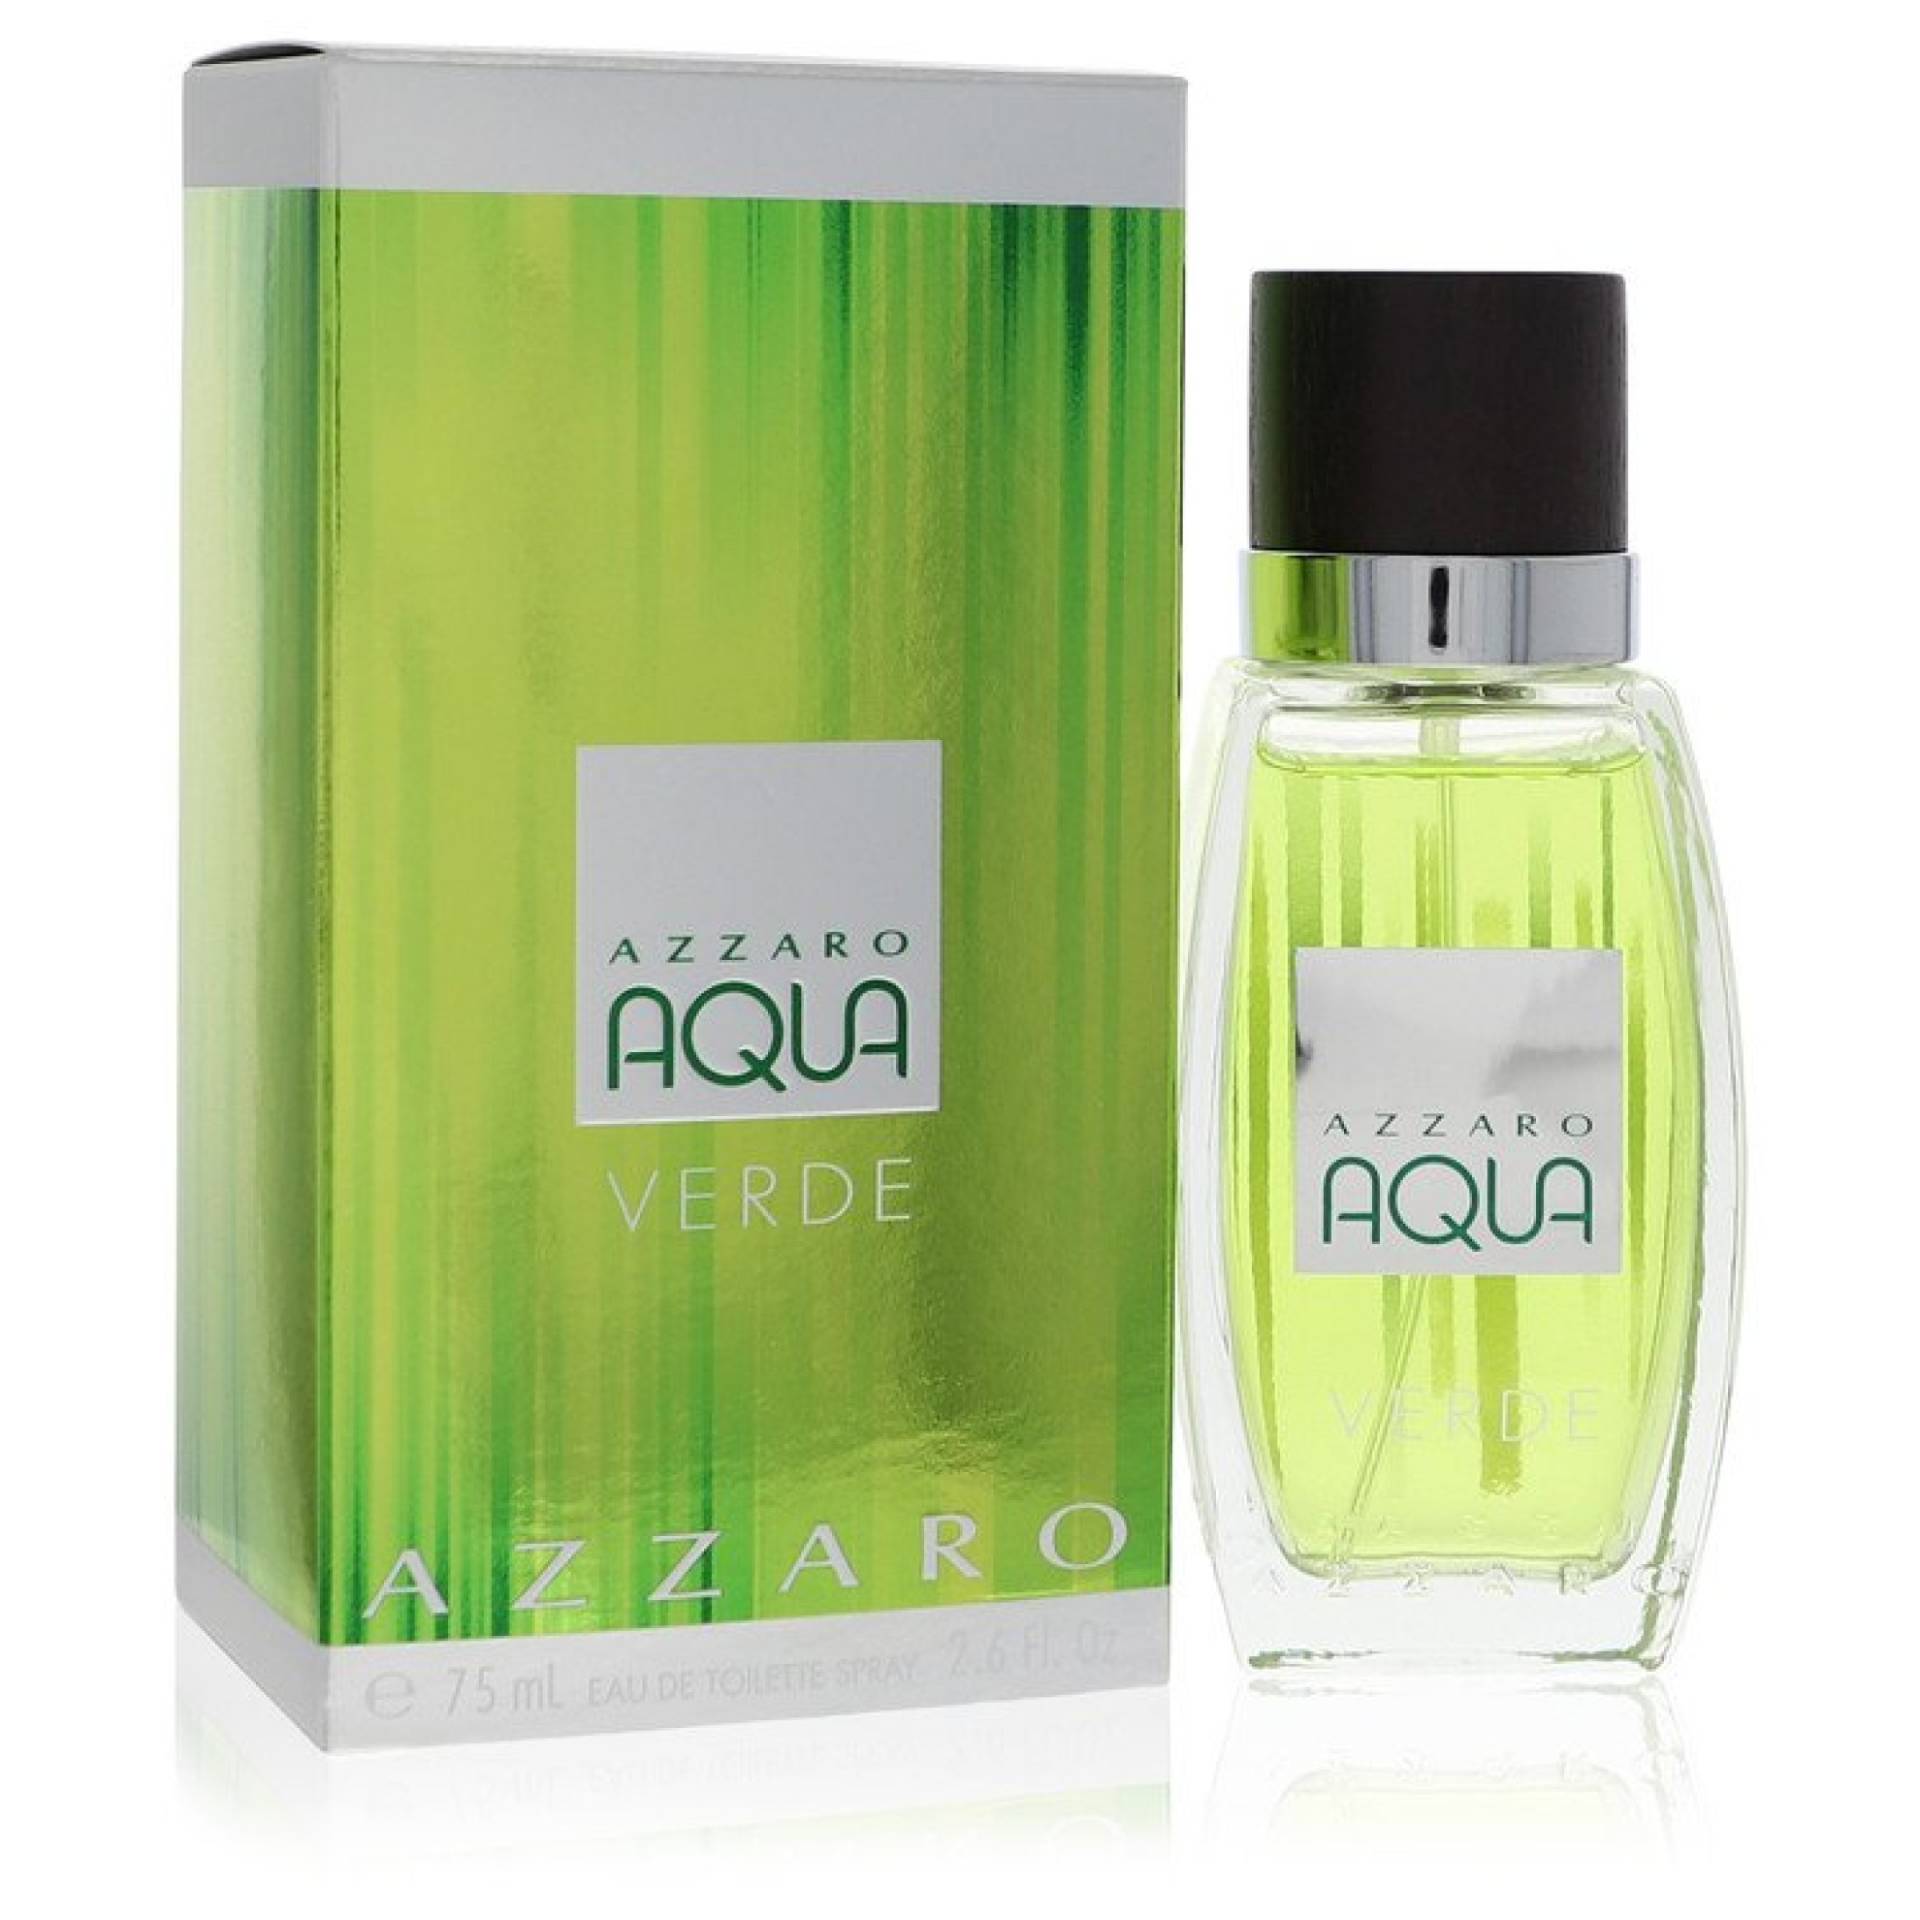 Azzaro Aqua Verde Eau De Toilette Spray 76 ml von Azzaro